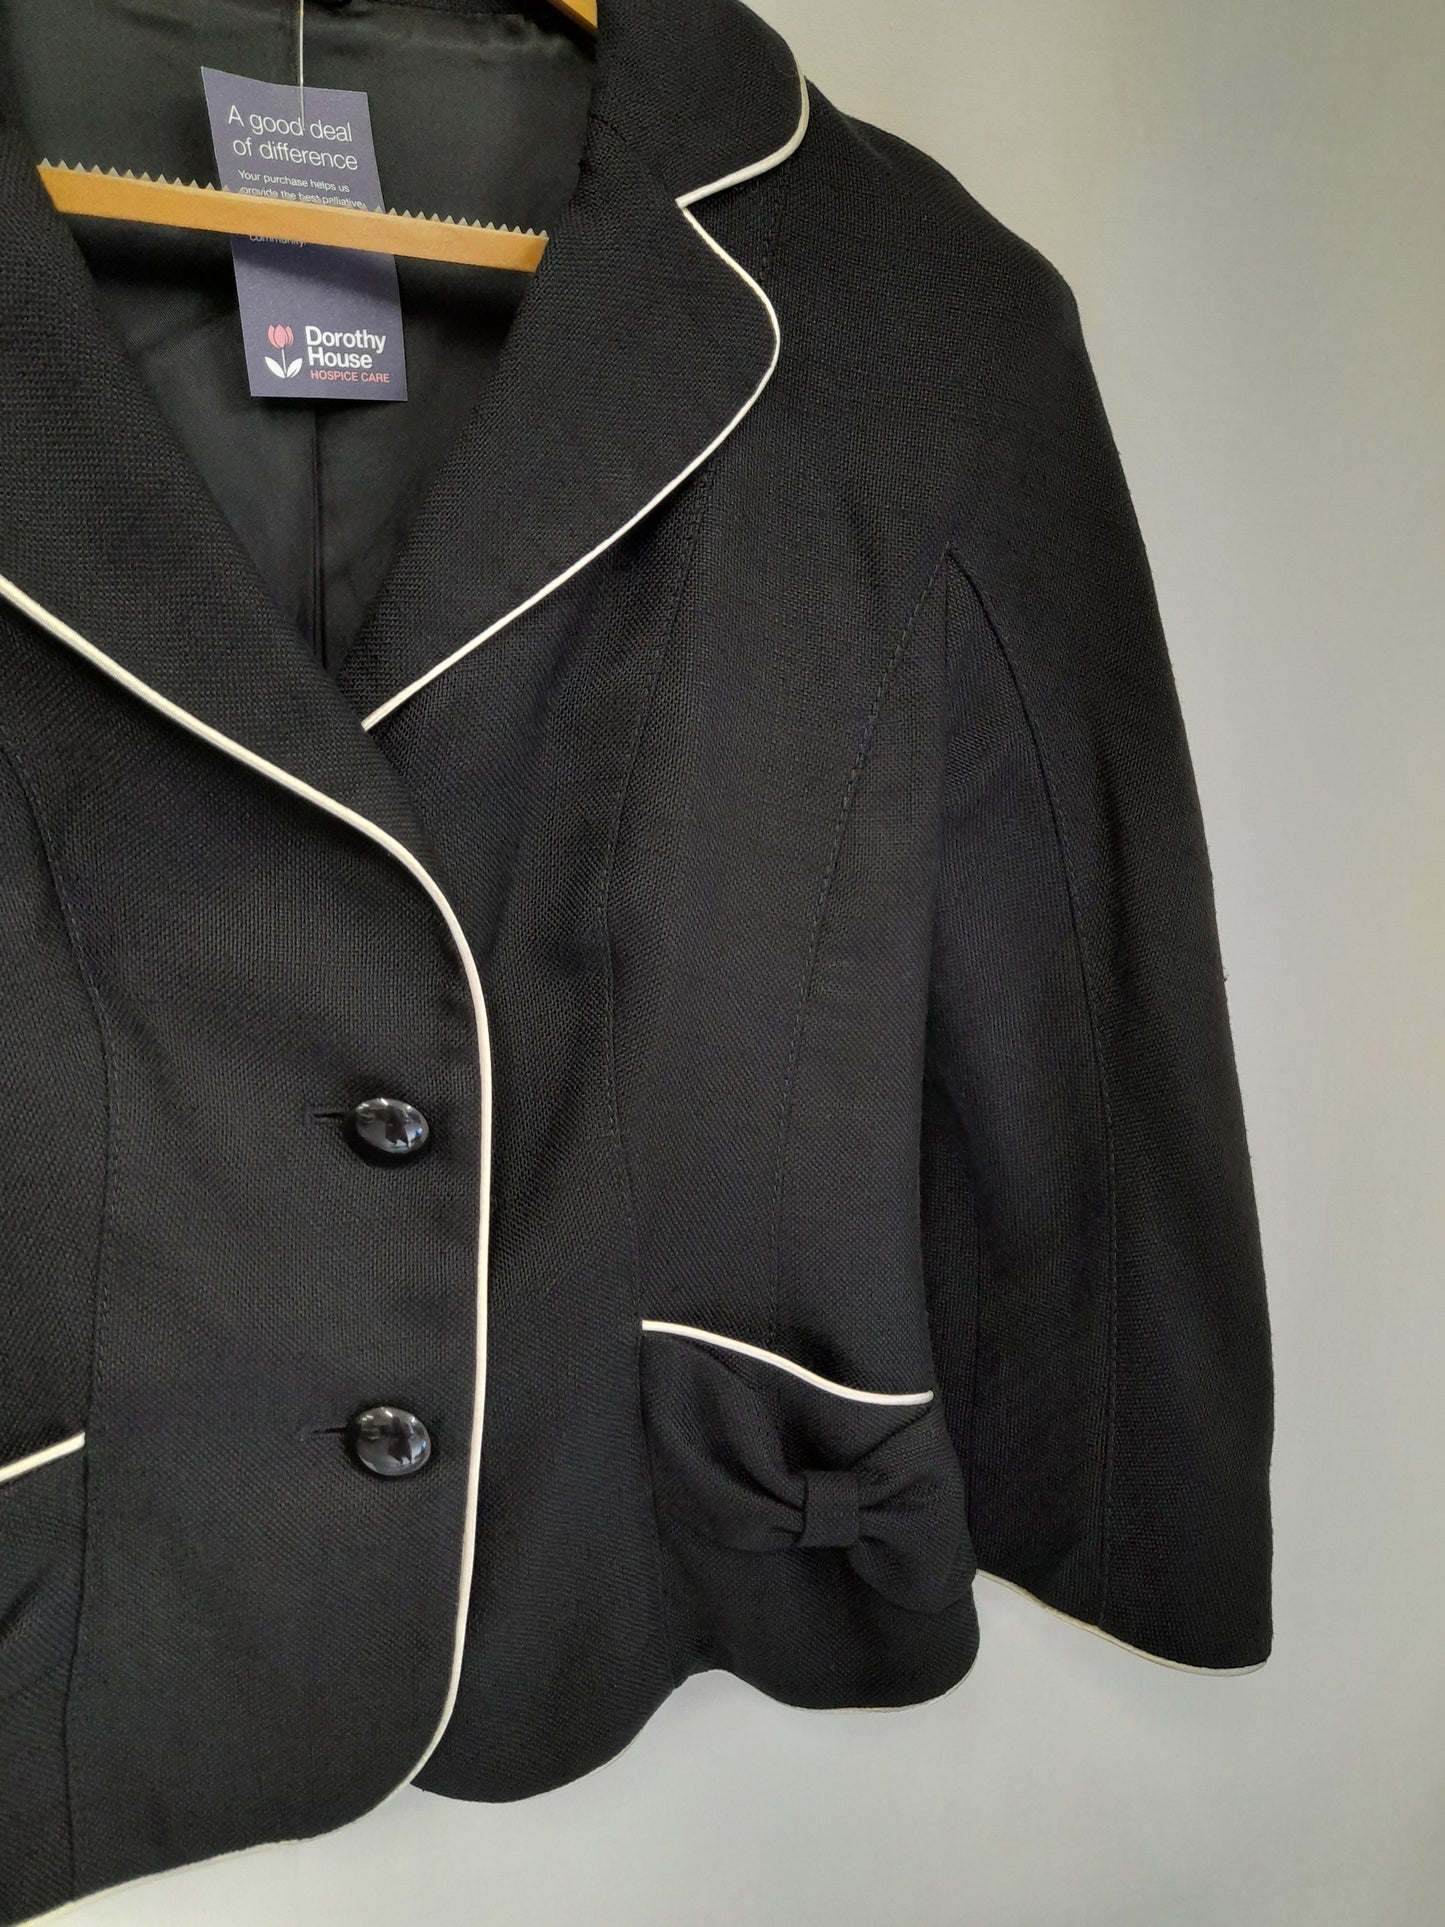 Retro Black Jacket With Cream Detailing & Bows Size 8